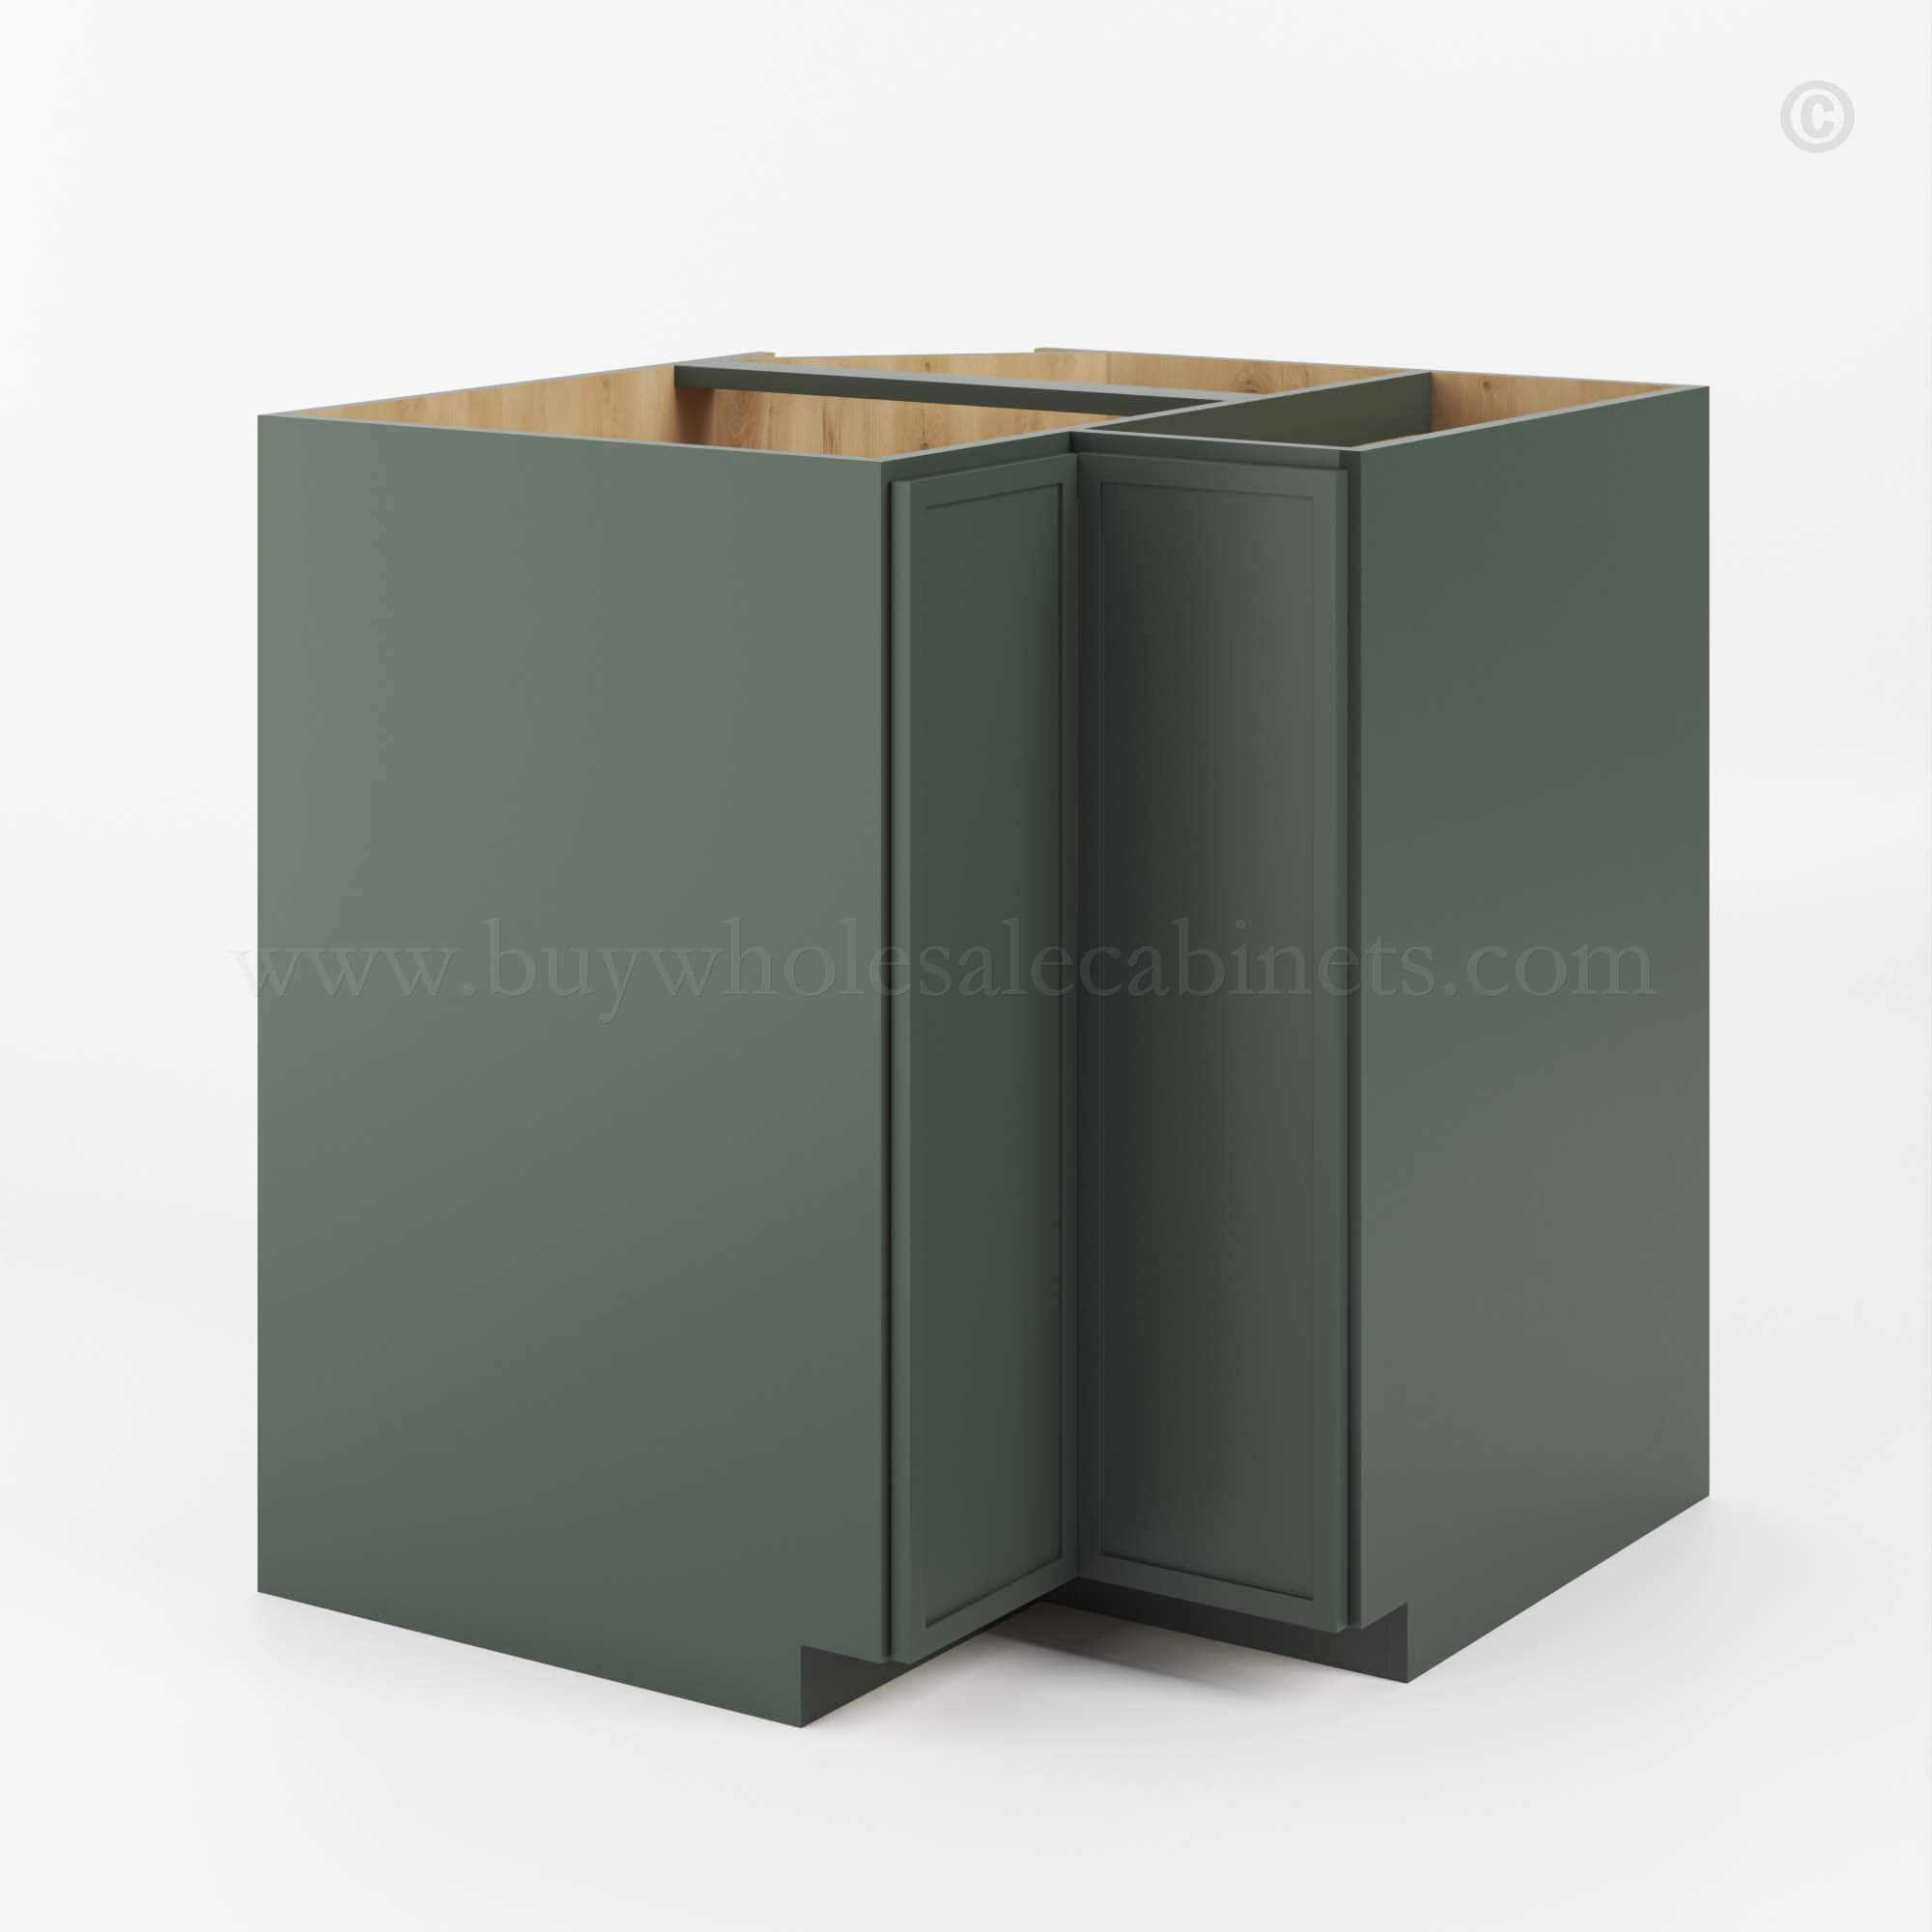 Slim Shaker Green Base Lazy Susan Cabinet, rta cabinets, wholesale cabinets